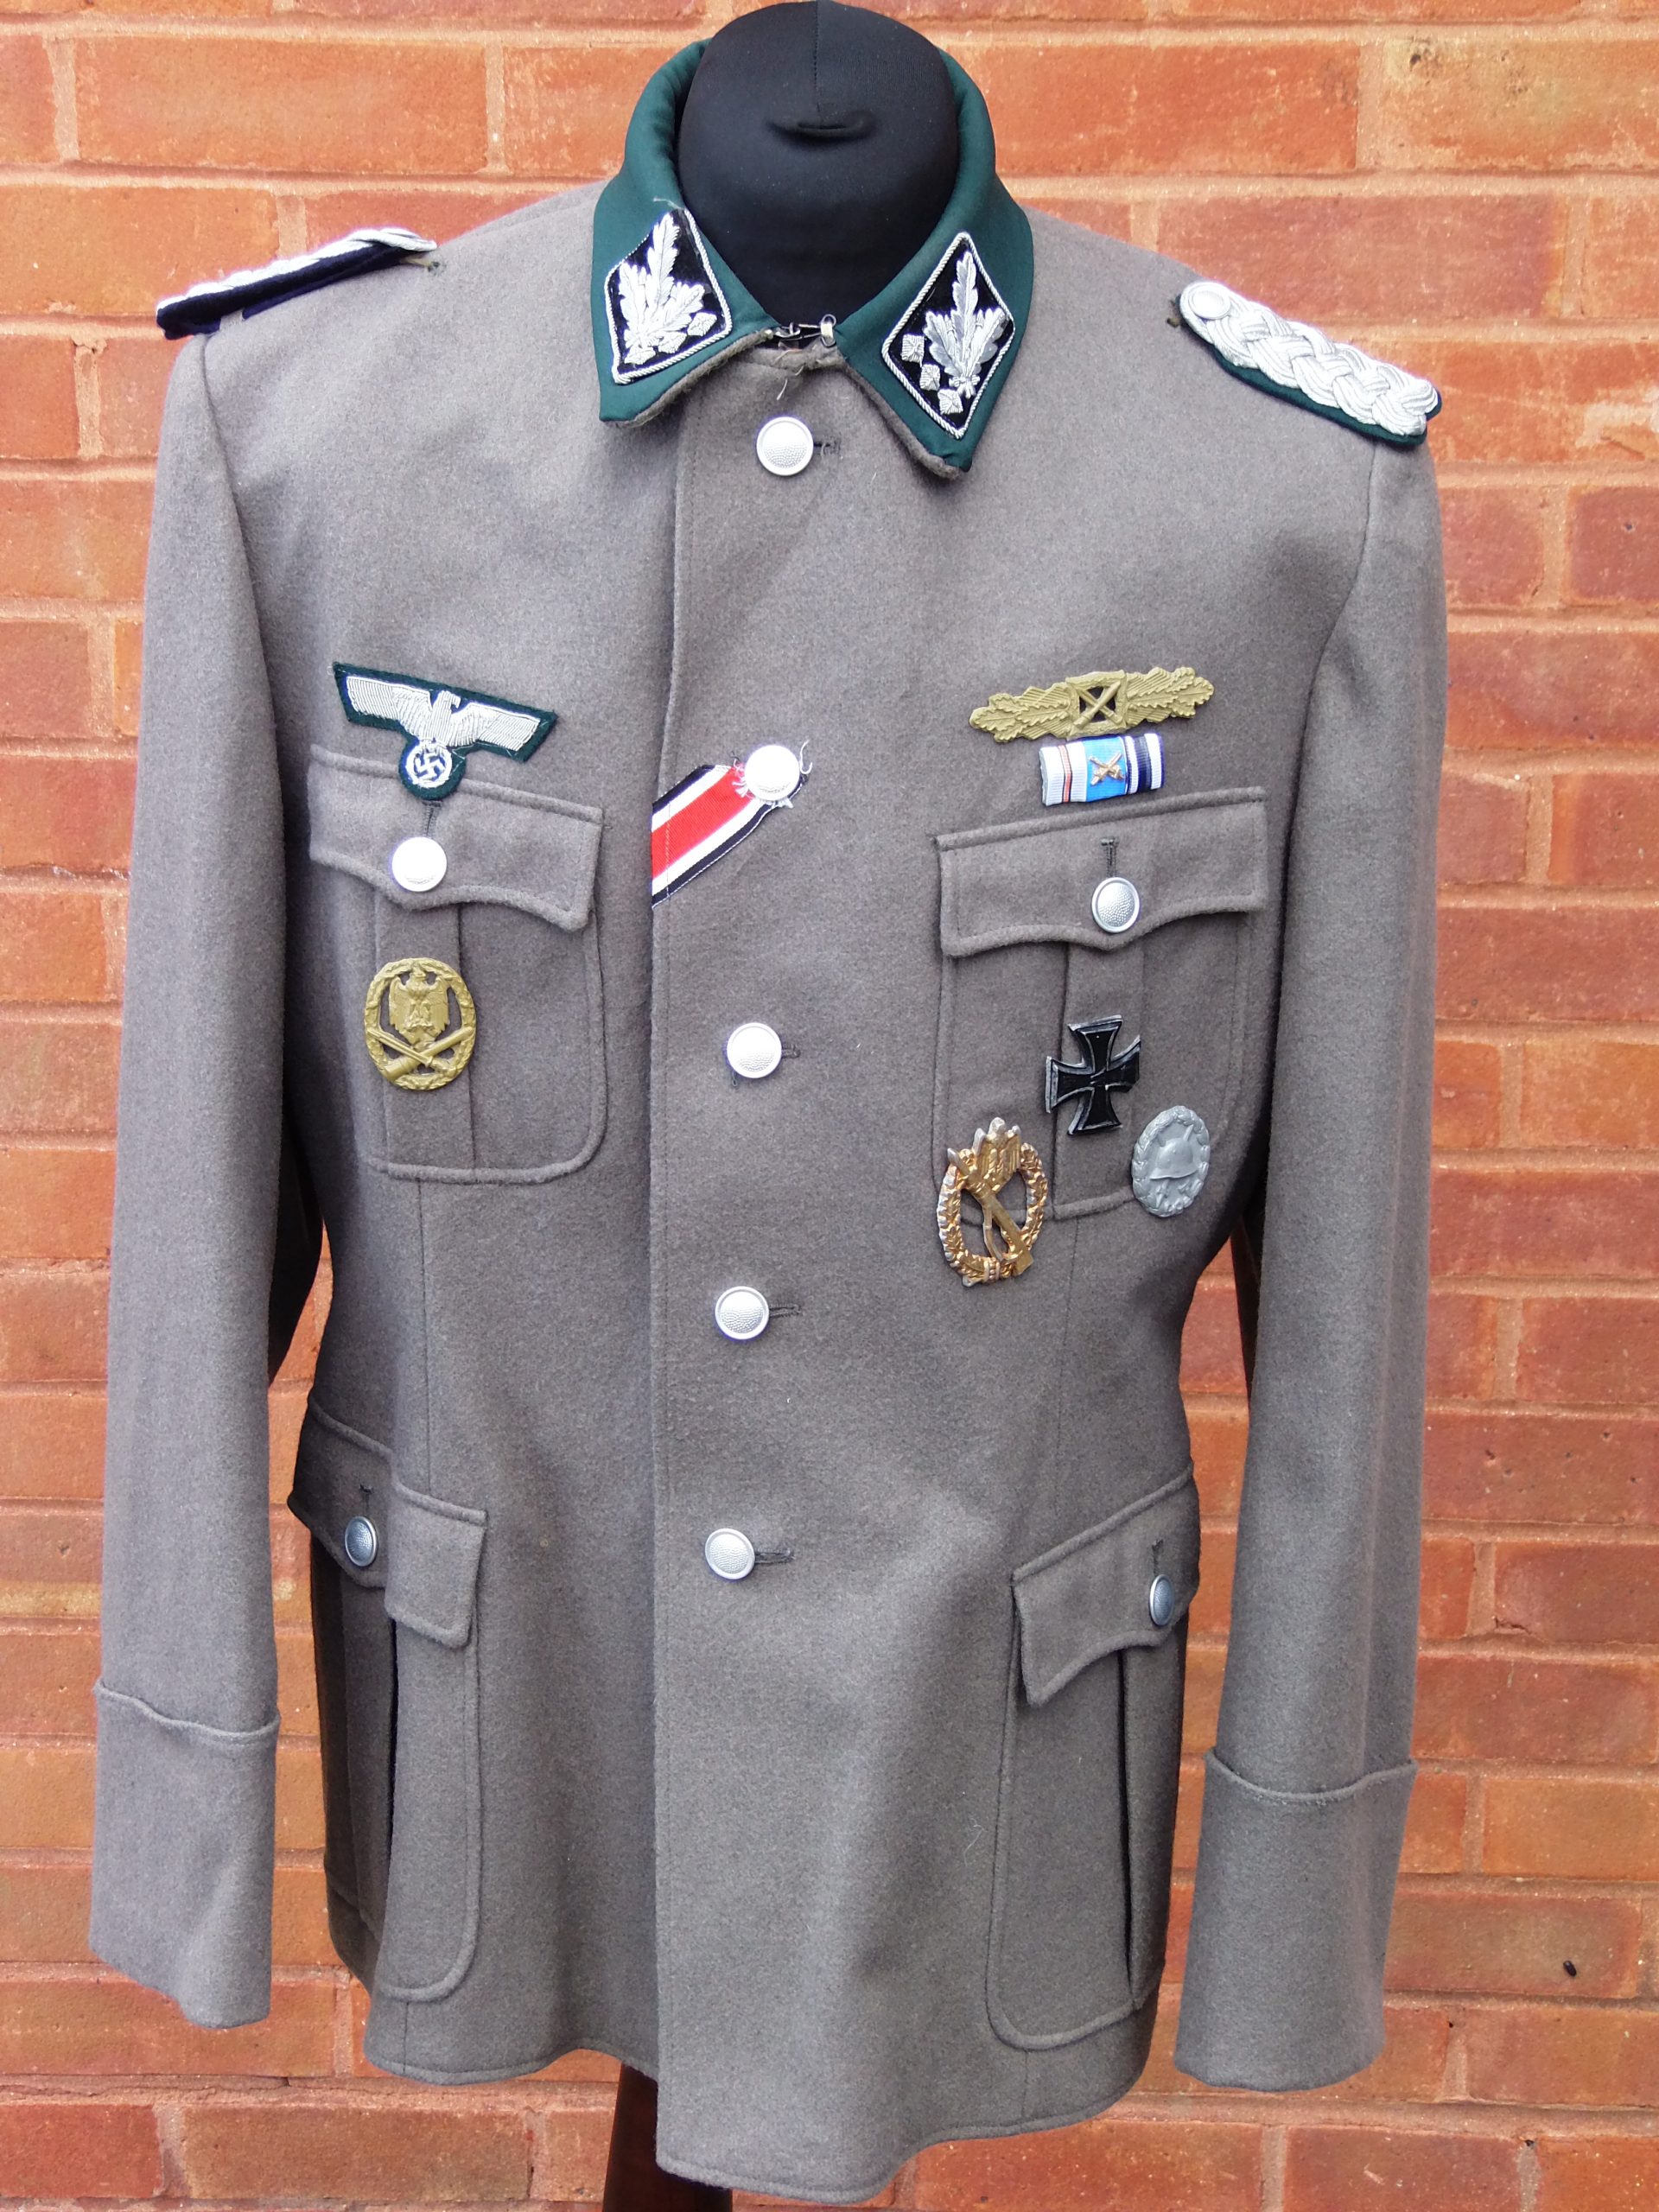 Colonel's uniform